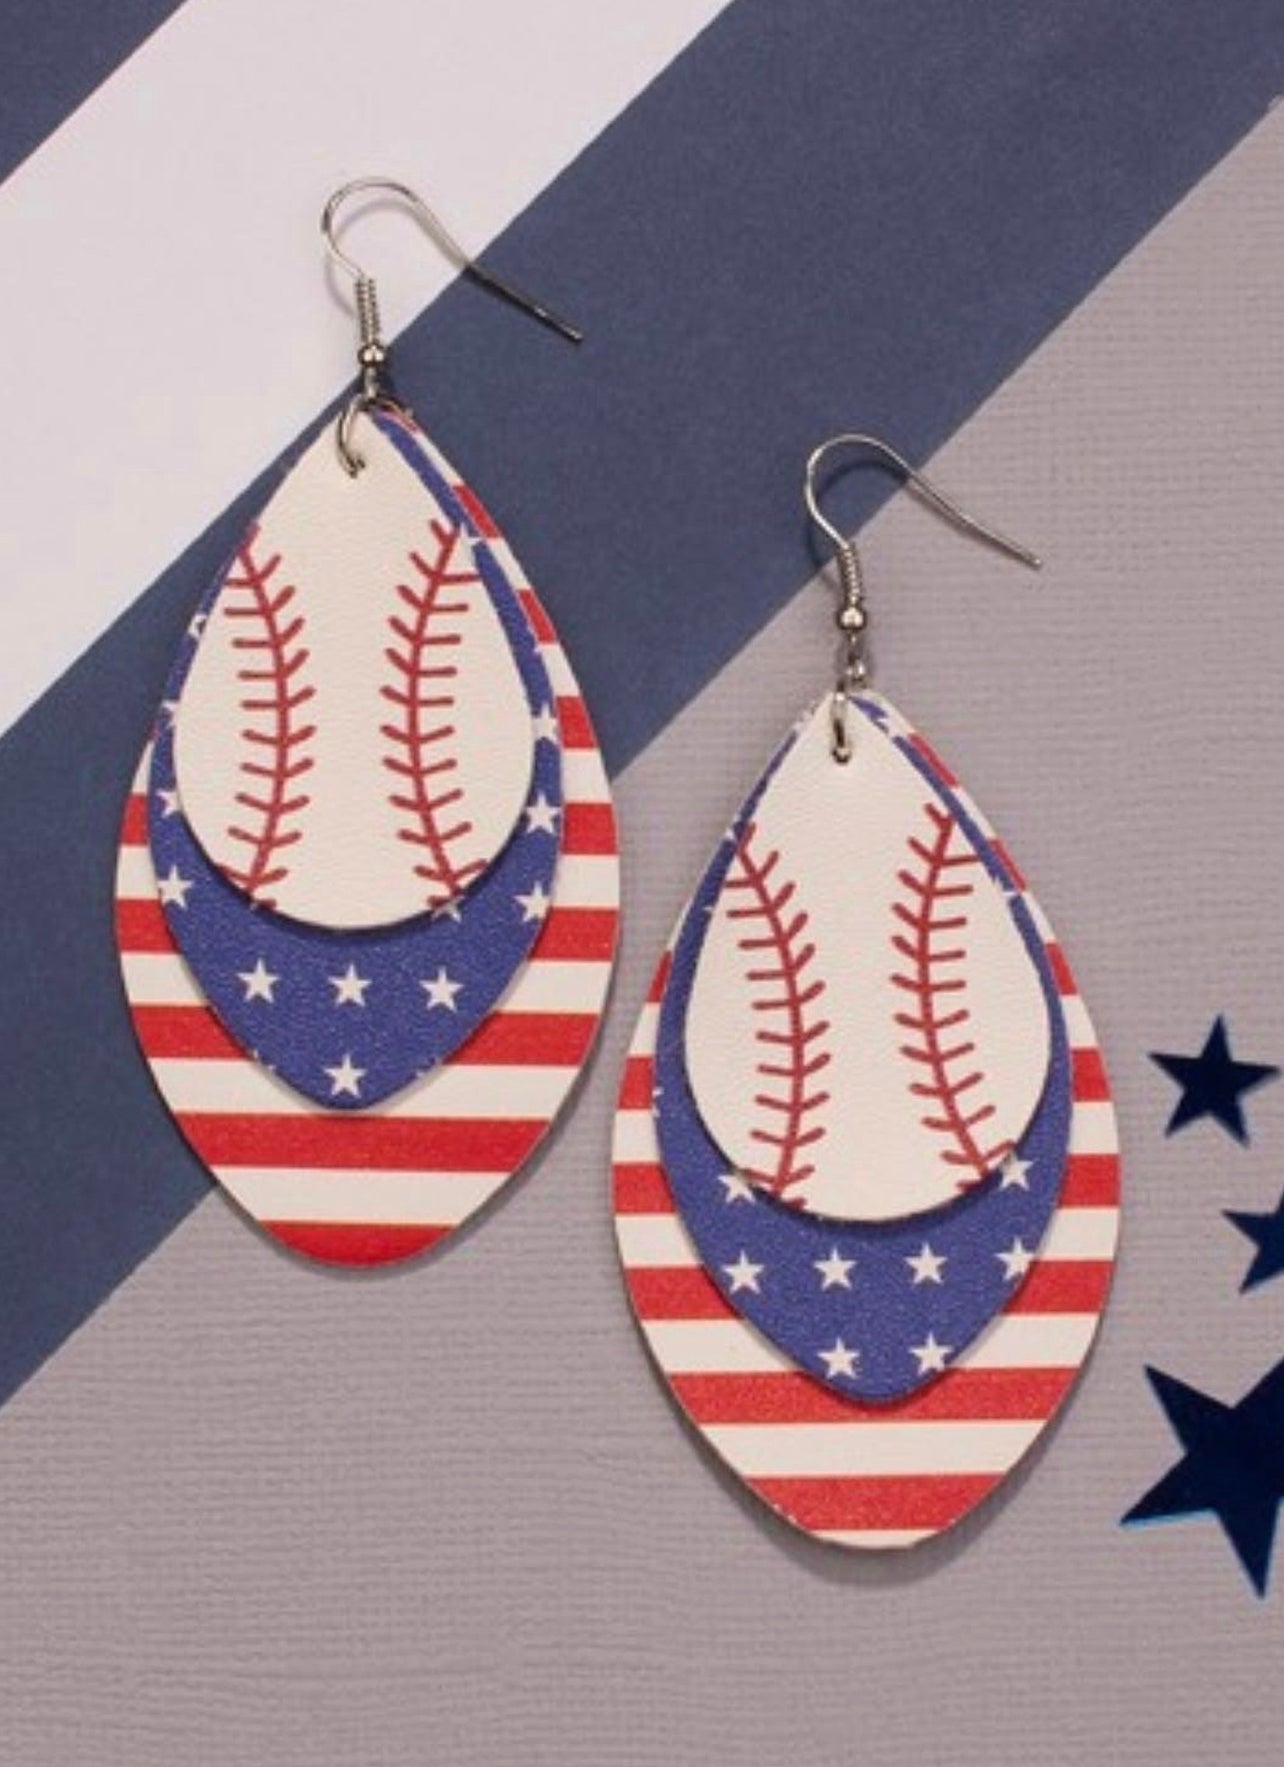 American flag and baseball earrings